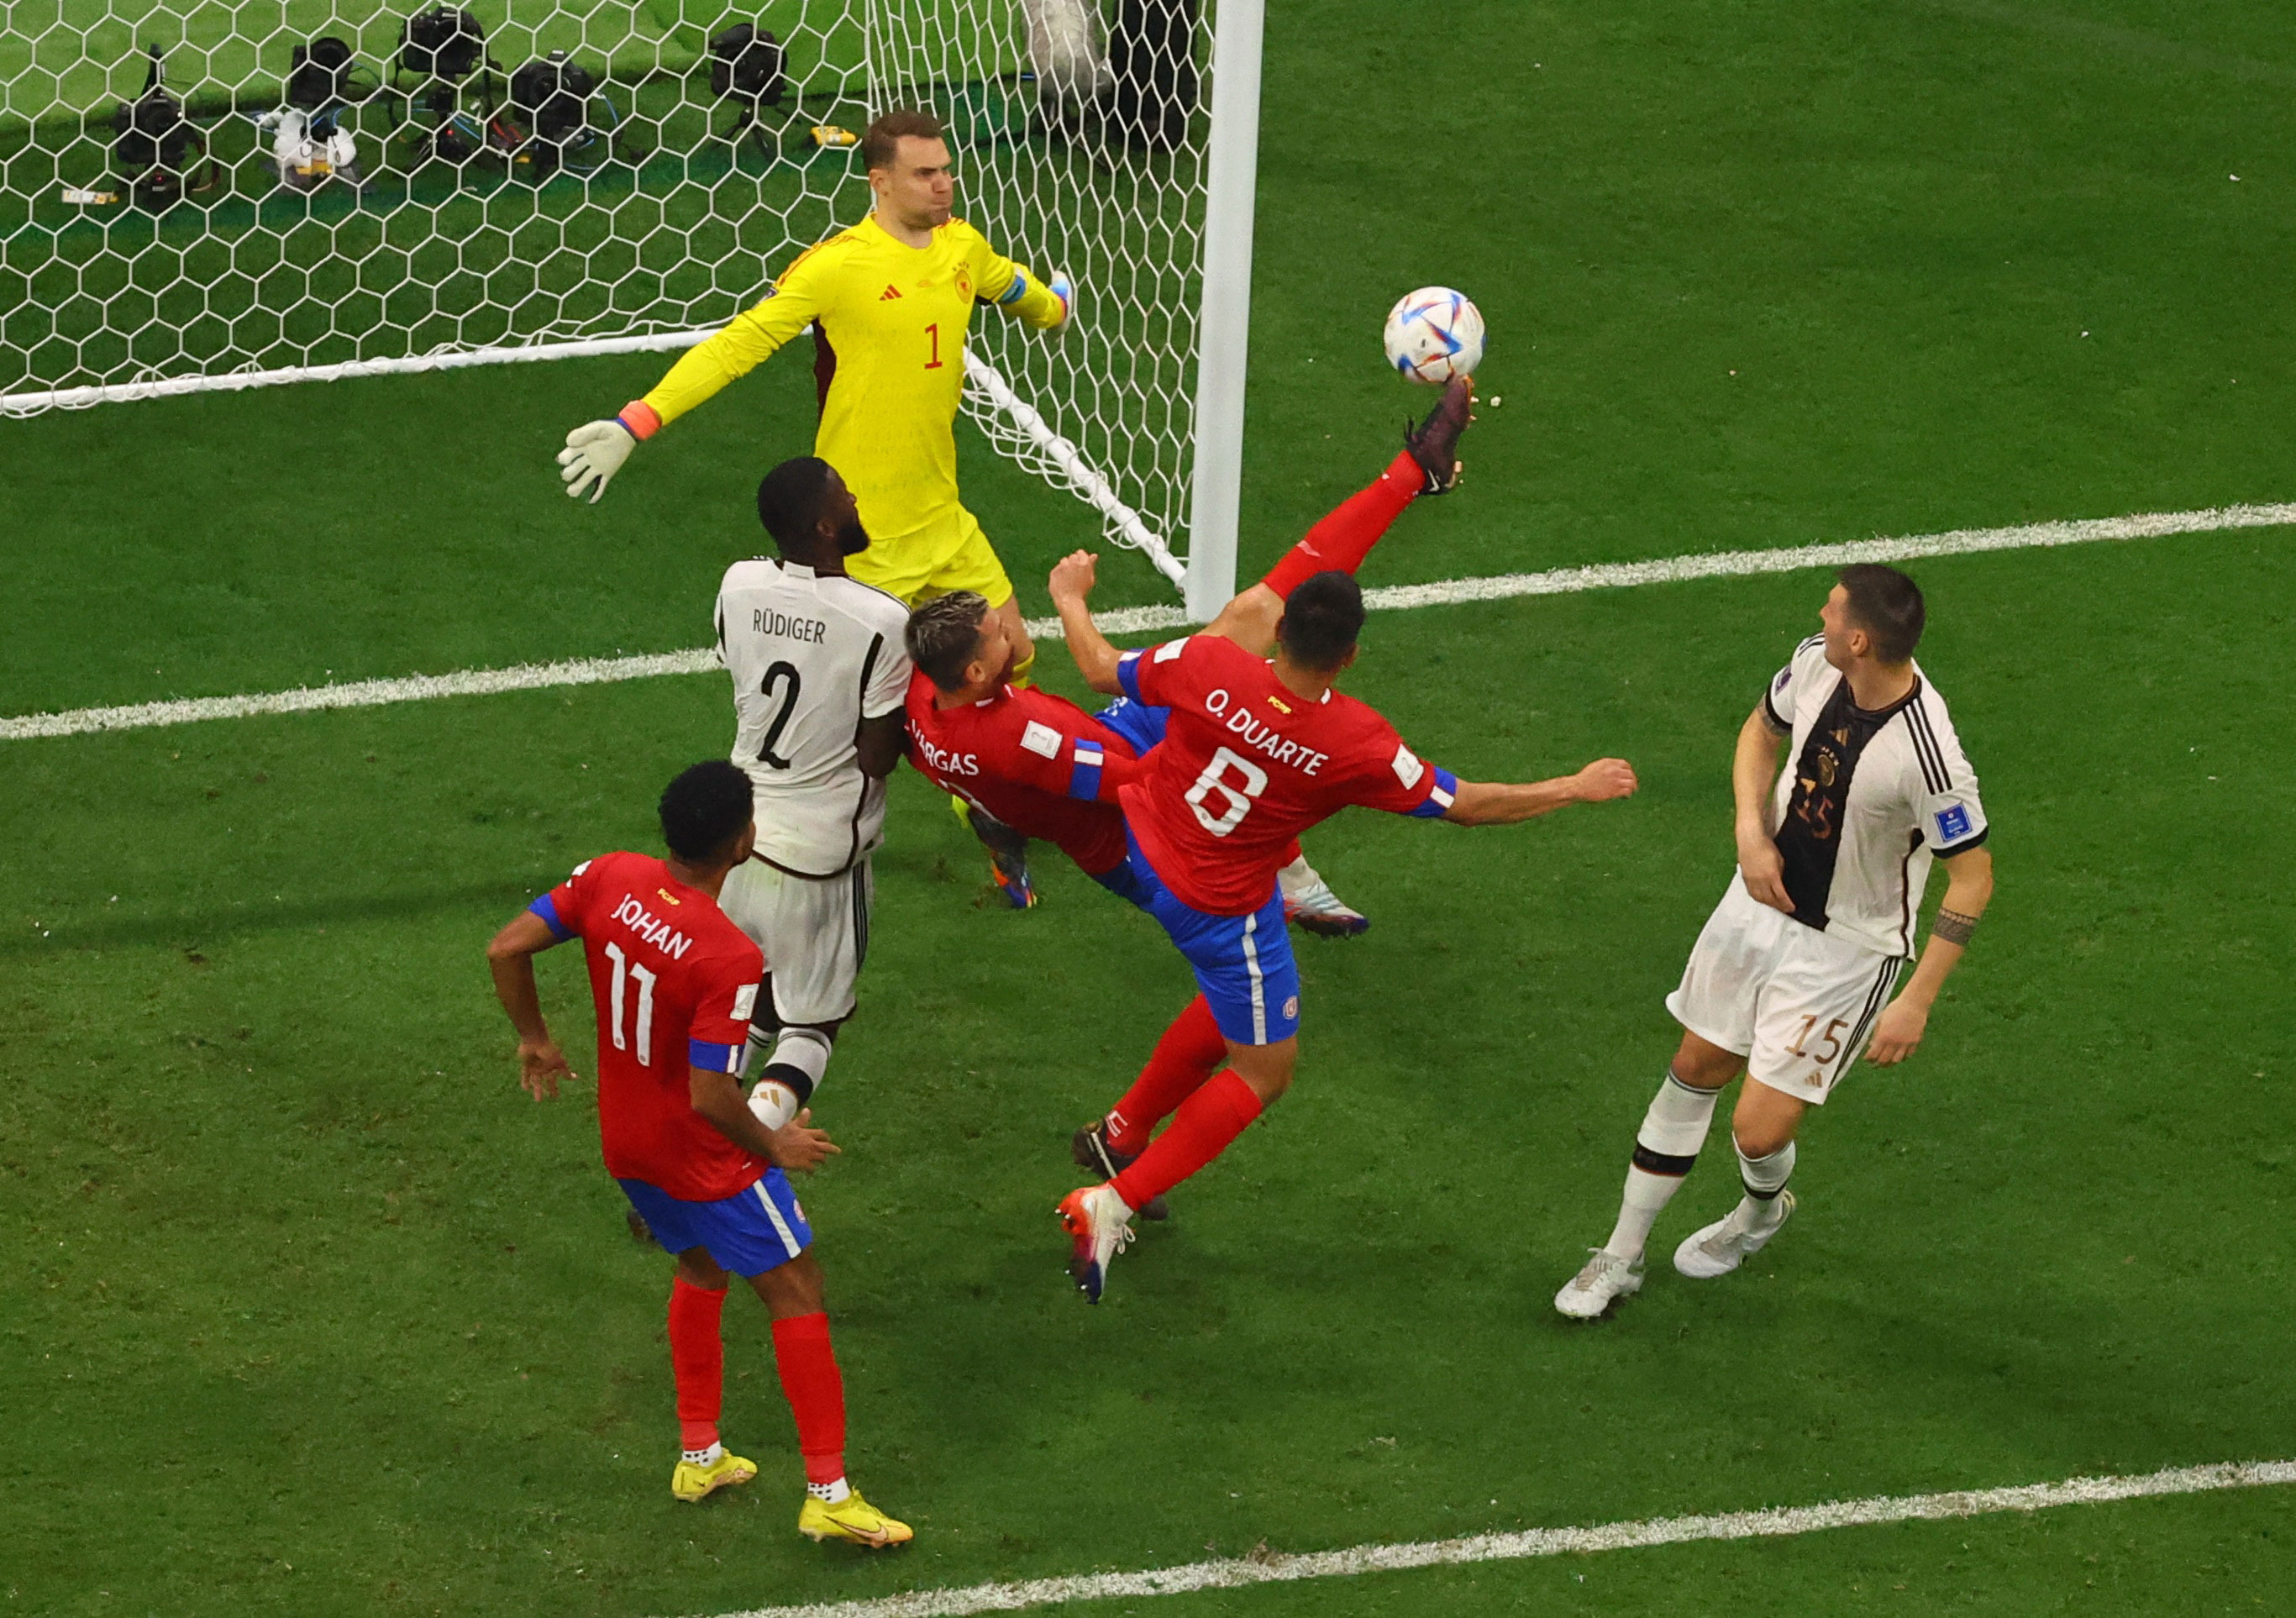 Costa Rica's Juan Pablo Vargas scores his team's second goal against Germany.